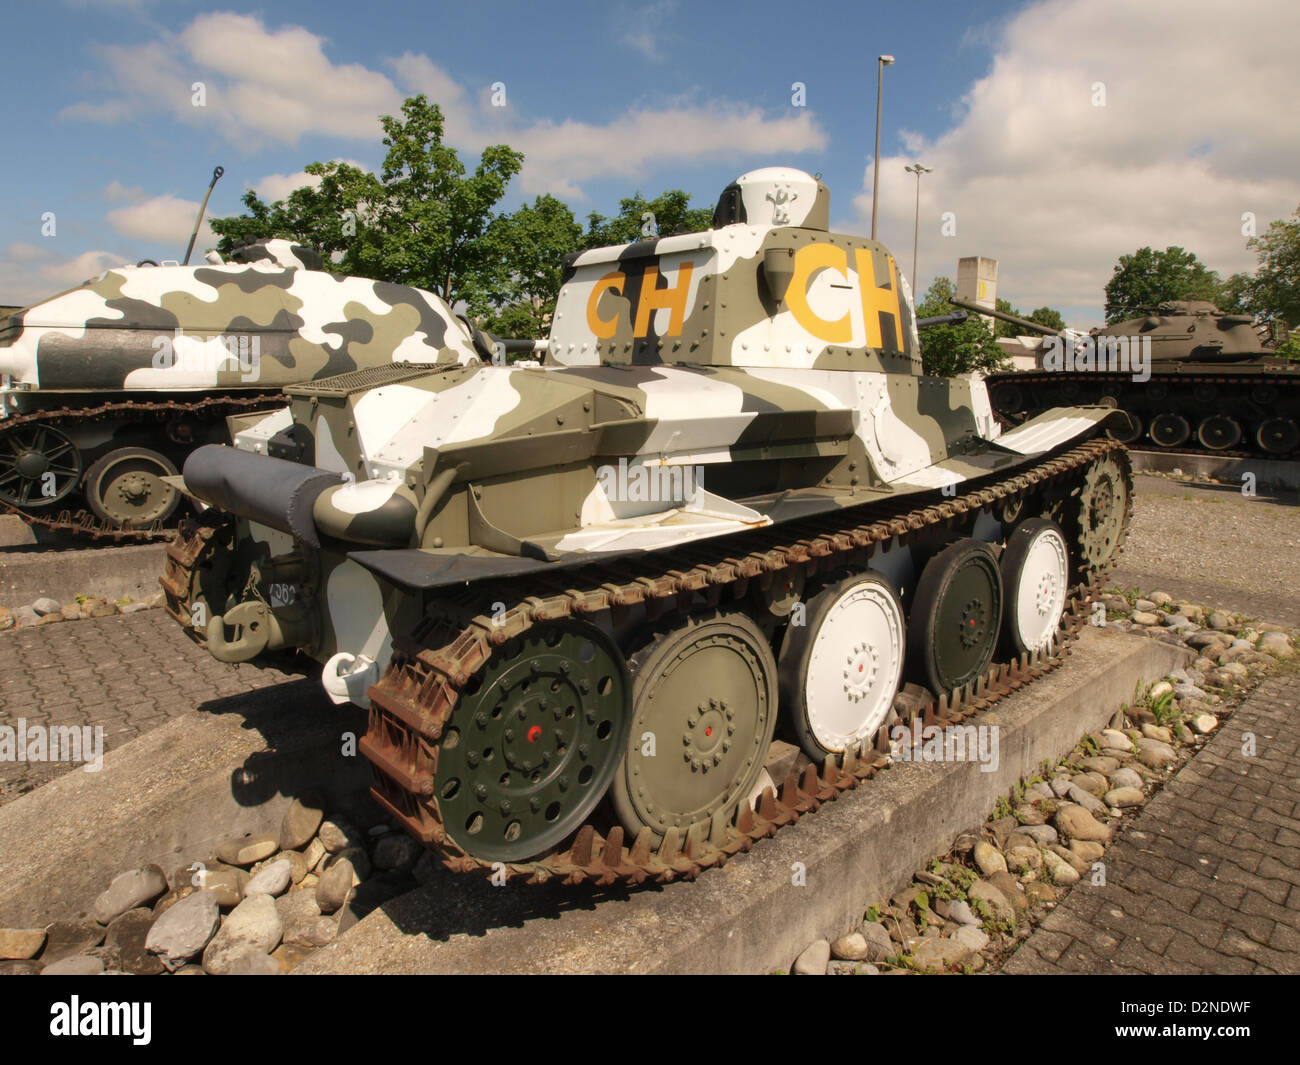 Panzerwagen 39 praga tank hi-res stock photography and images - Alamy